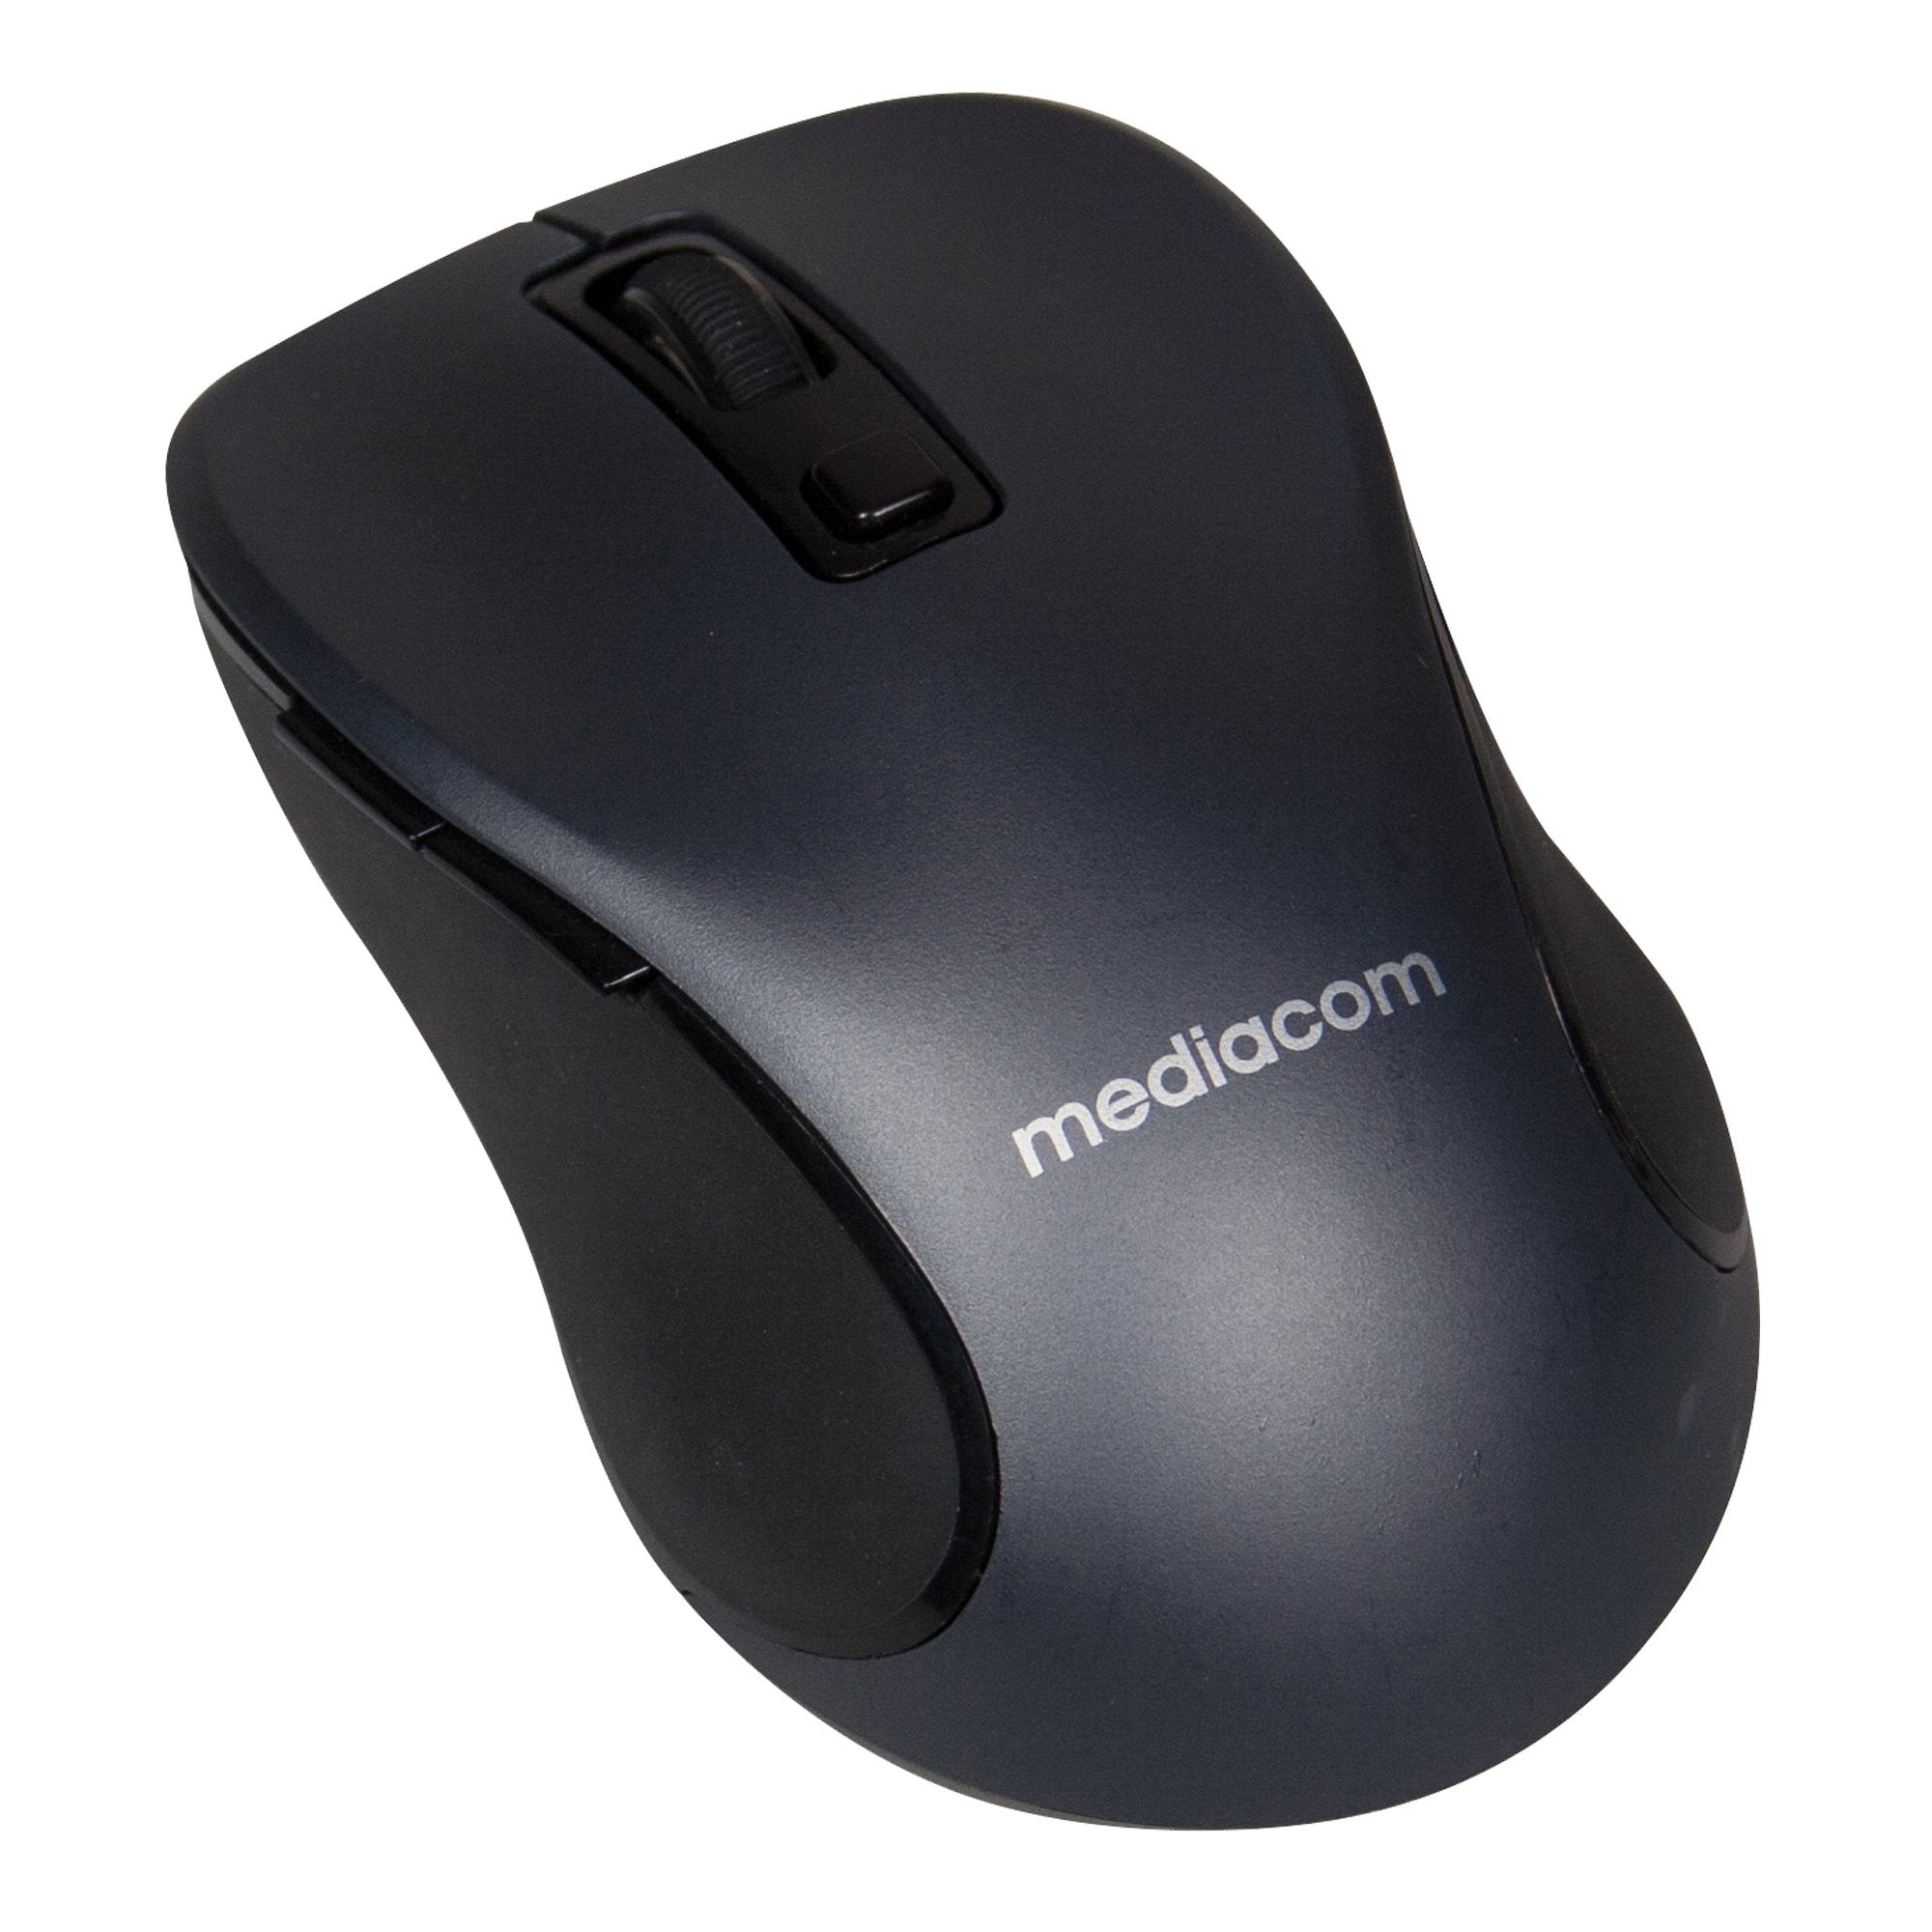 mediacom-mouse-bluetooth-ax910